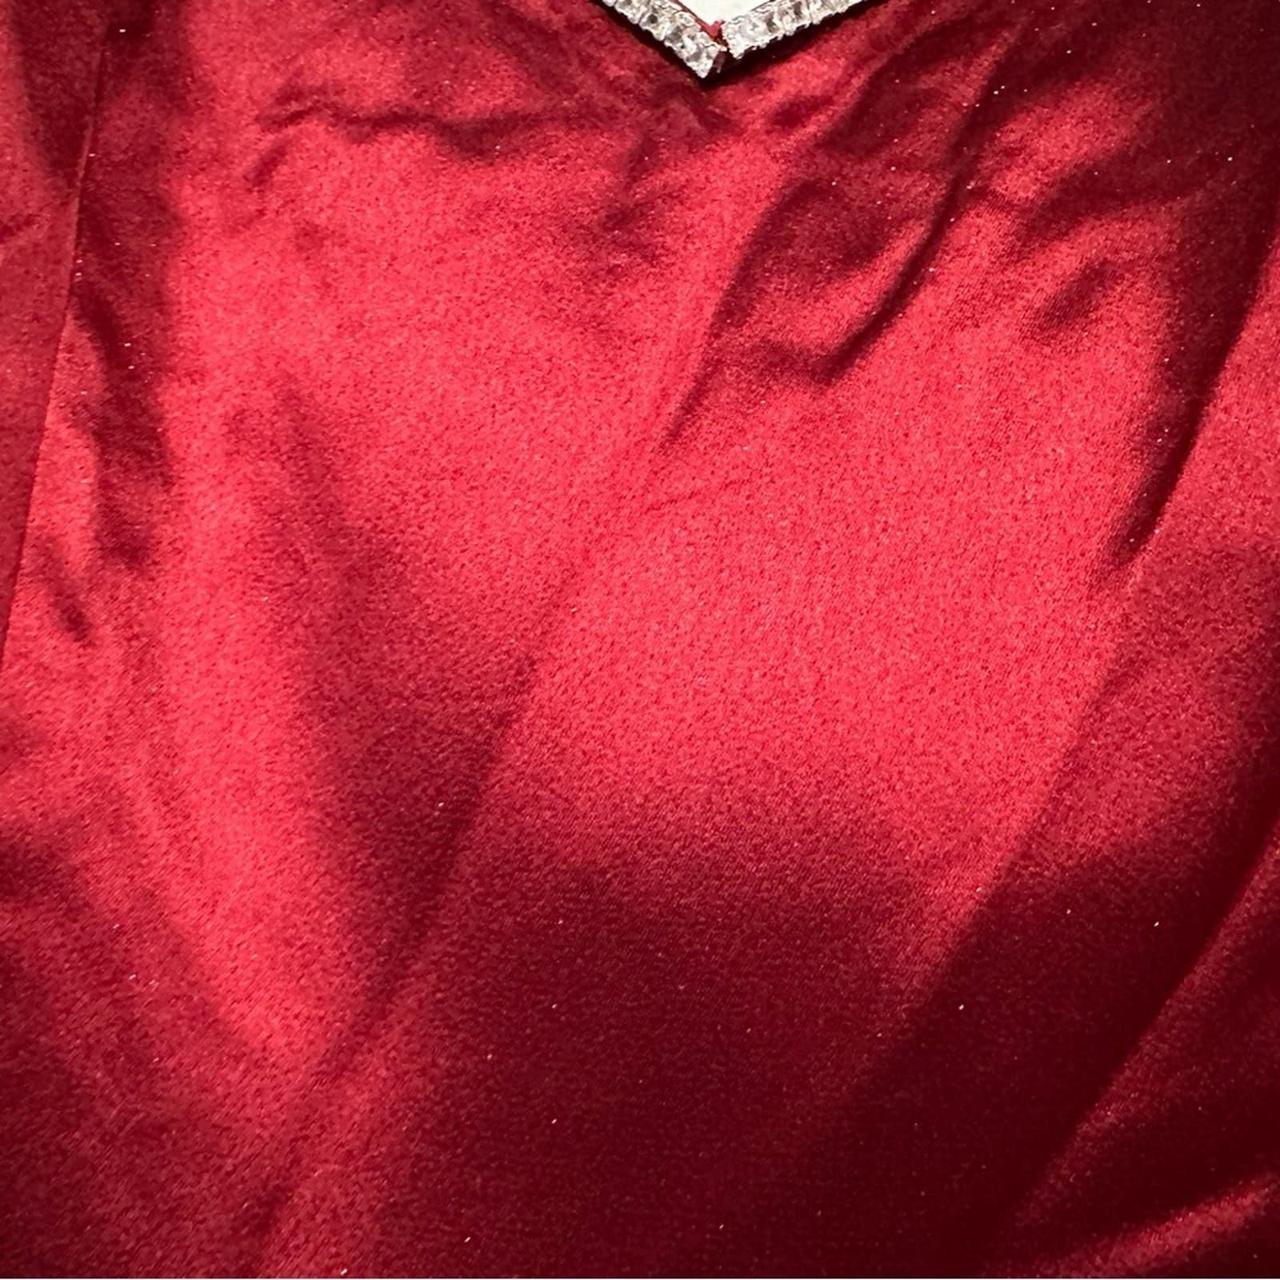 On sale is the Nana Jacqueline Romina Dress Red... - Depop